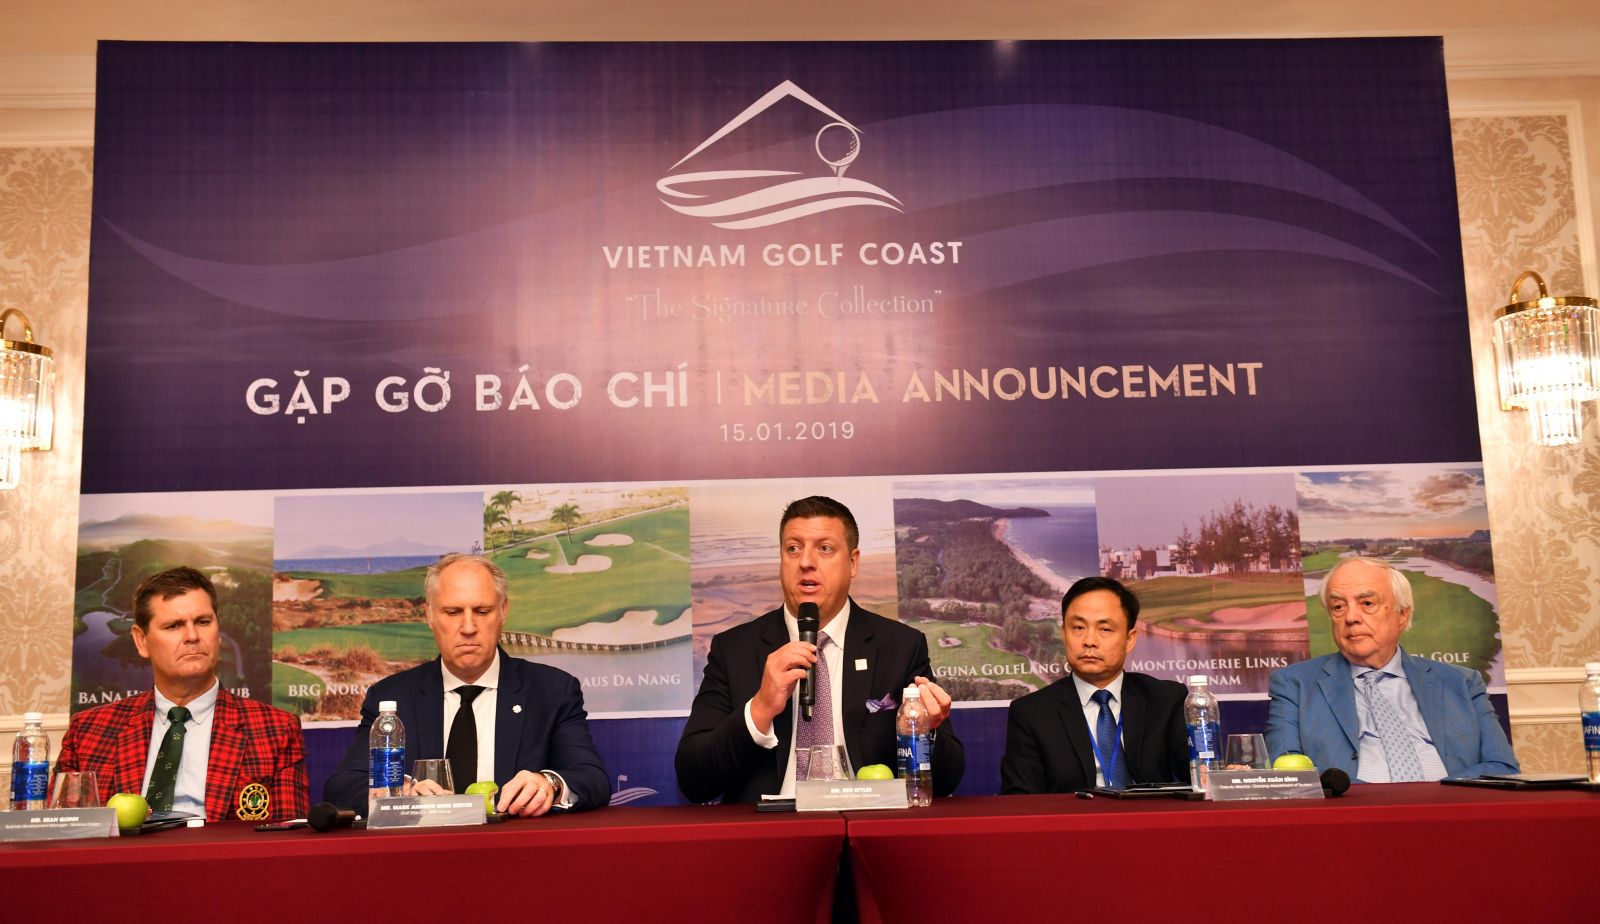 ‘Vietnam Golf Coast’ Forms to Create Unique Golf Destination